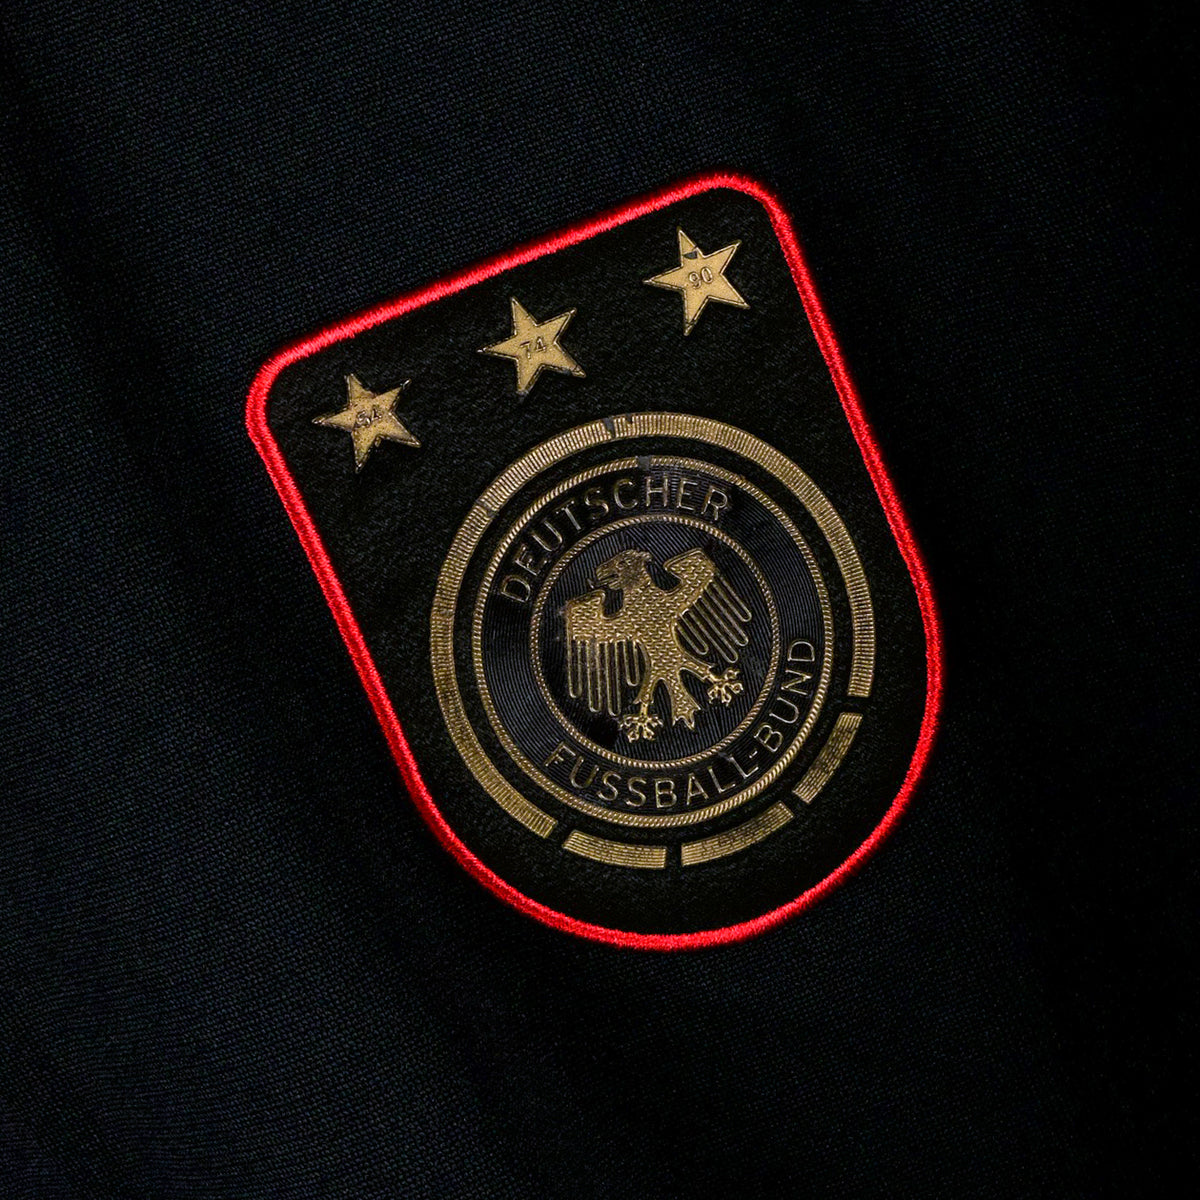 2010-2011 Germany Adidas Away Shirt